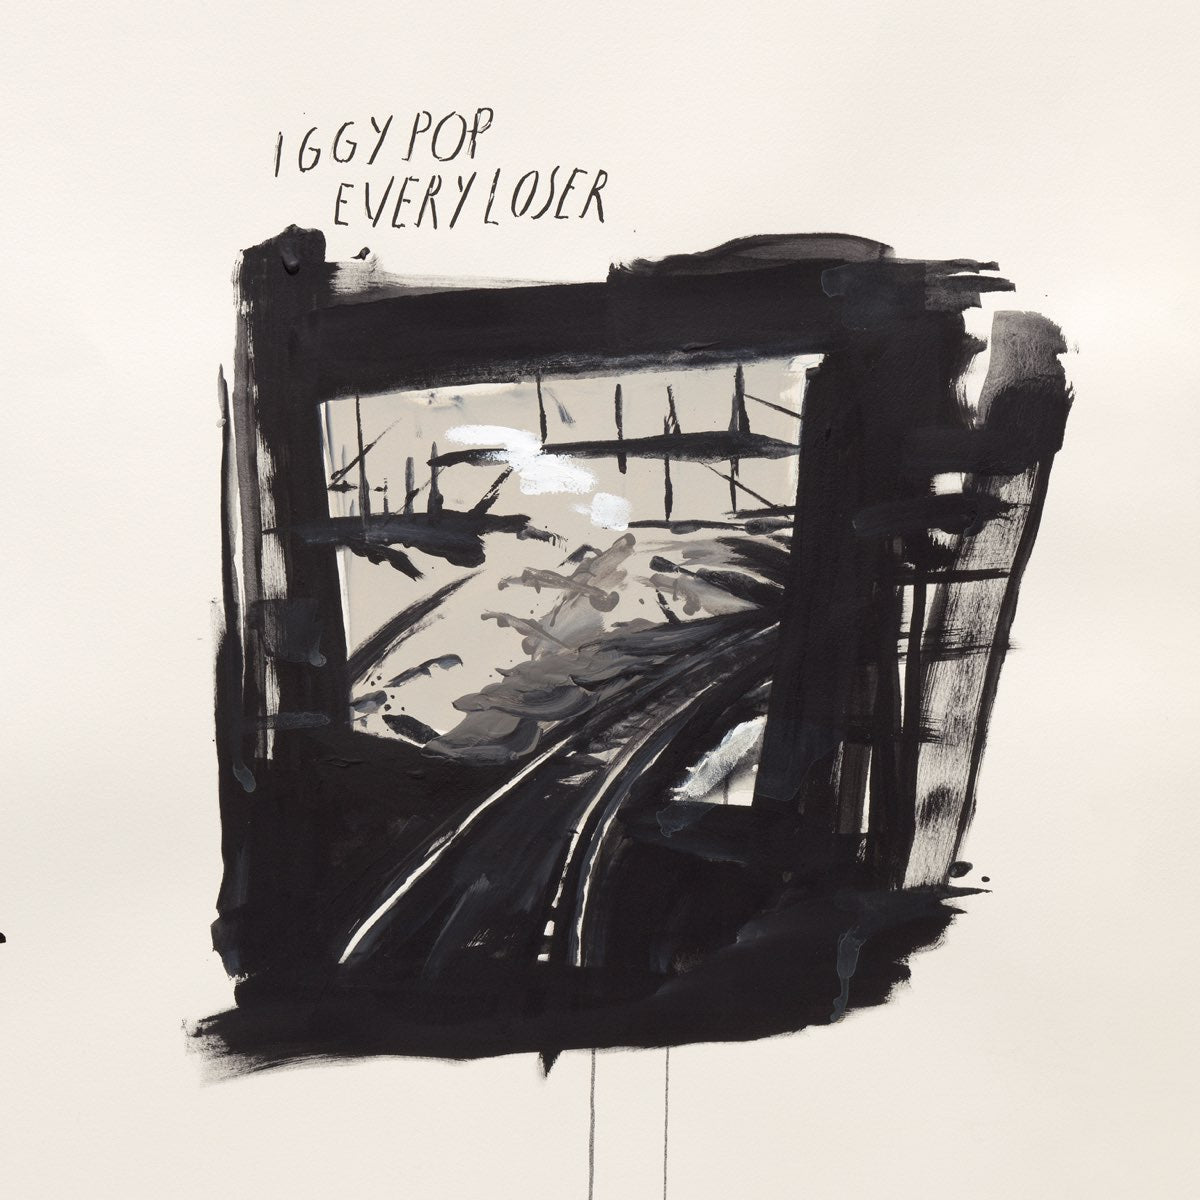 Pop, Iggy: Every Loser (Vinyl LP)